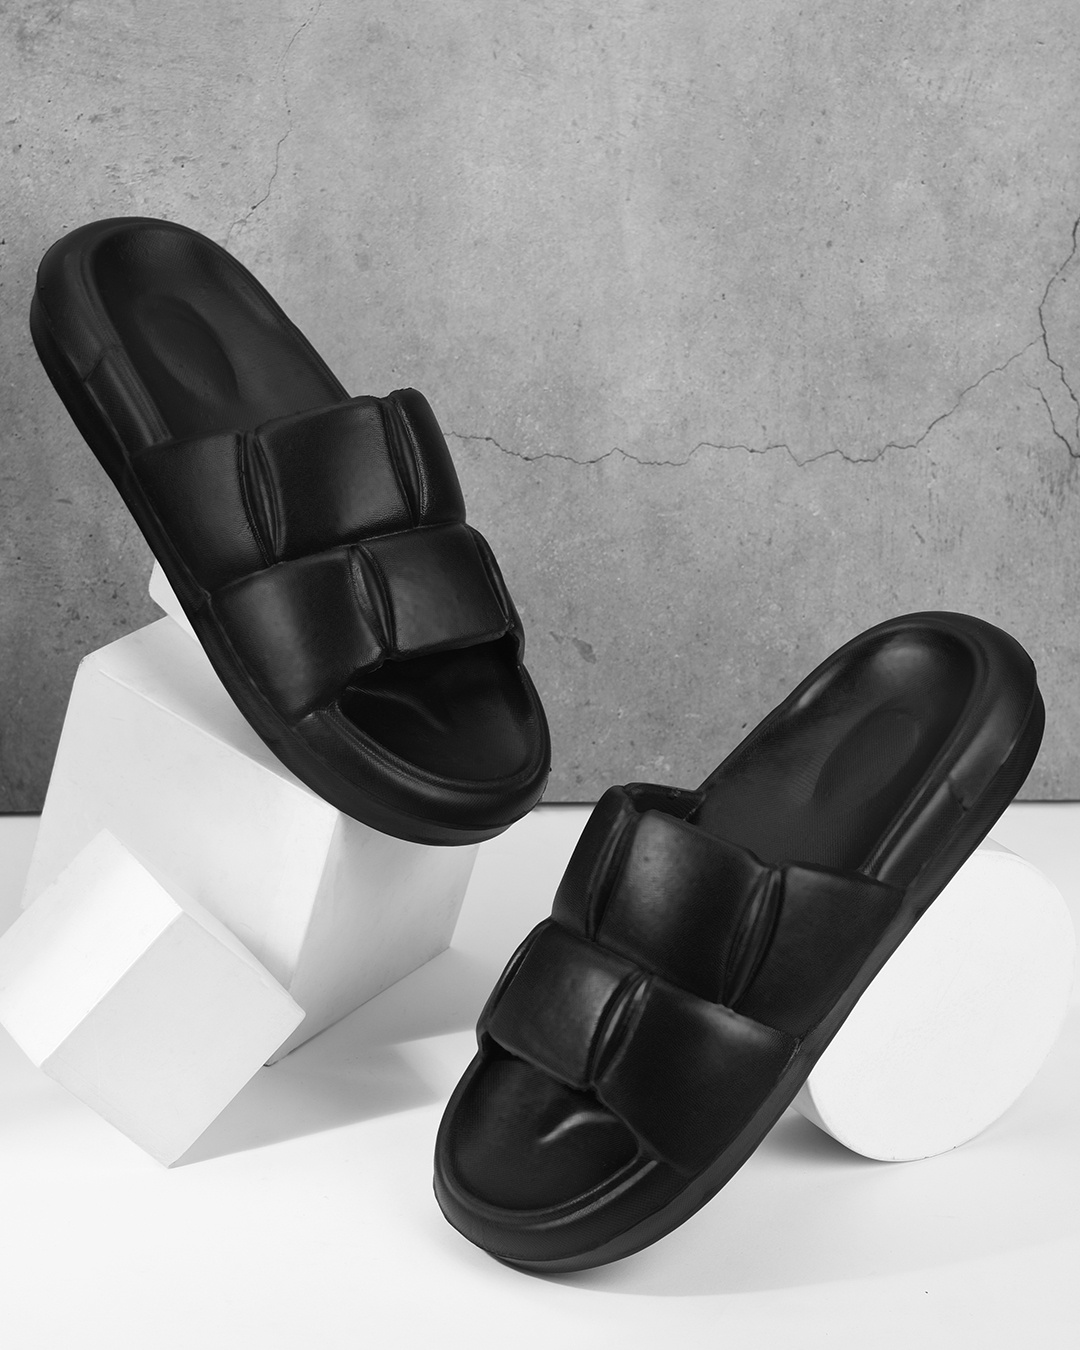 Buy Men's Black Cushioned Sliders Online in India at Bewakoof